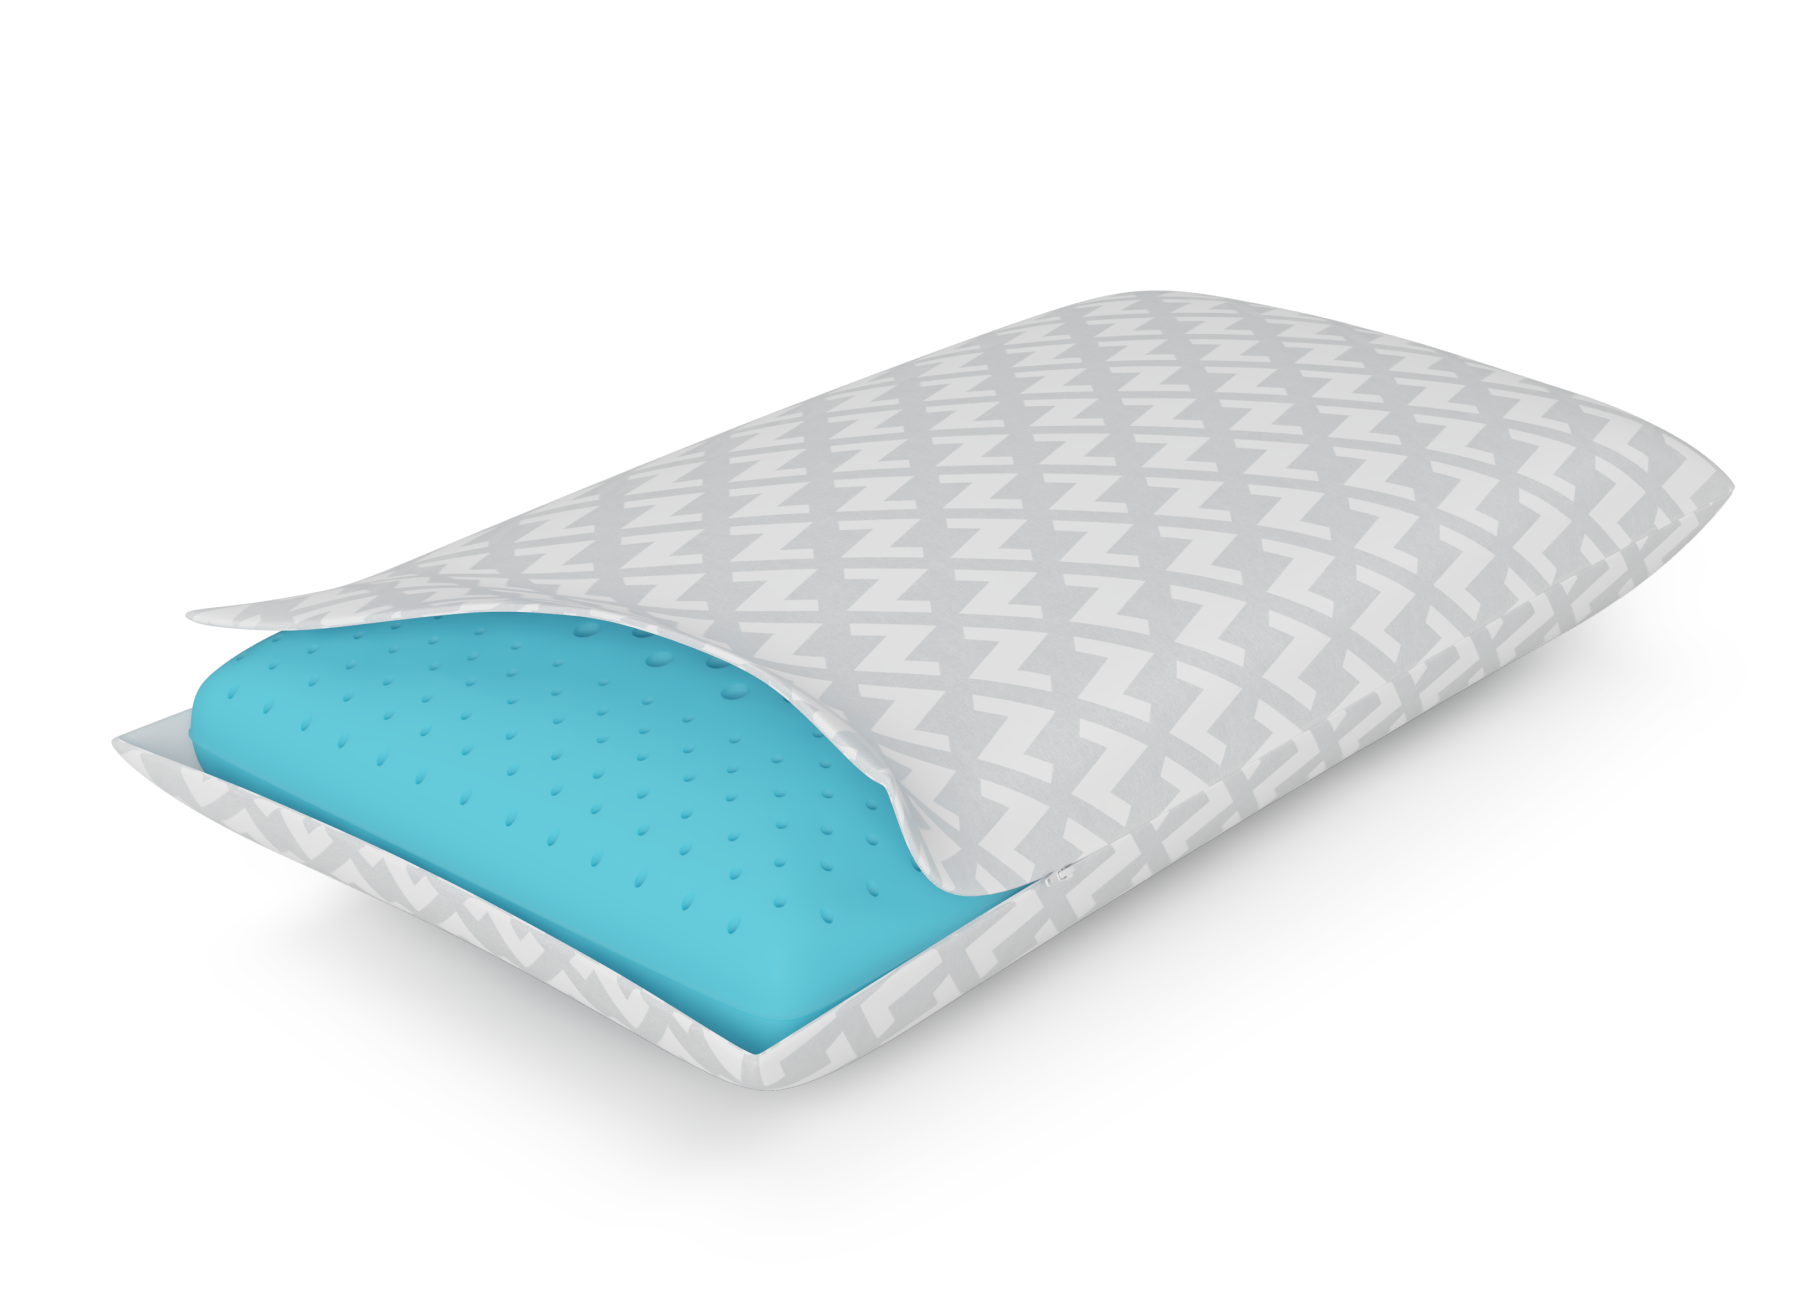 ActiveDough Cooling Gel Pillow